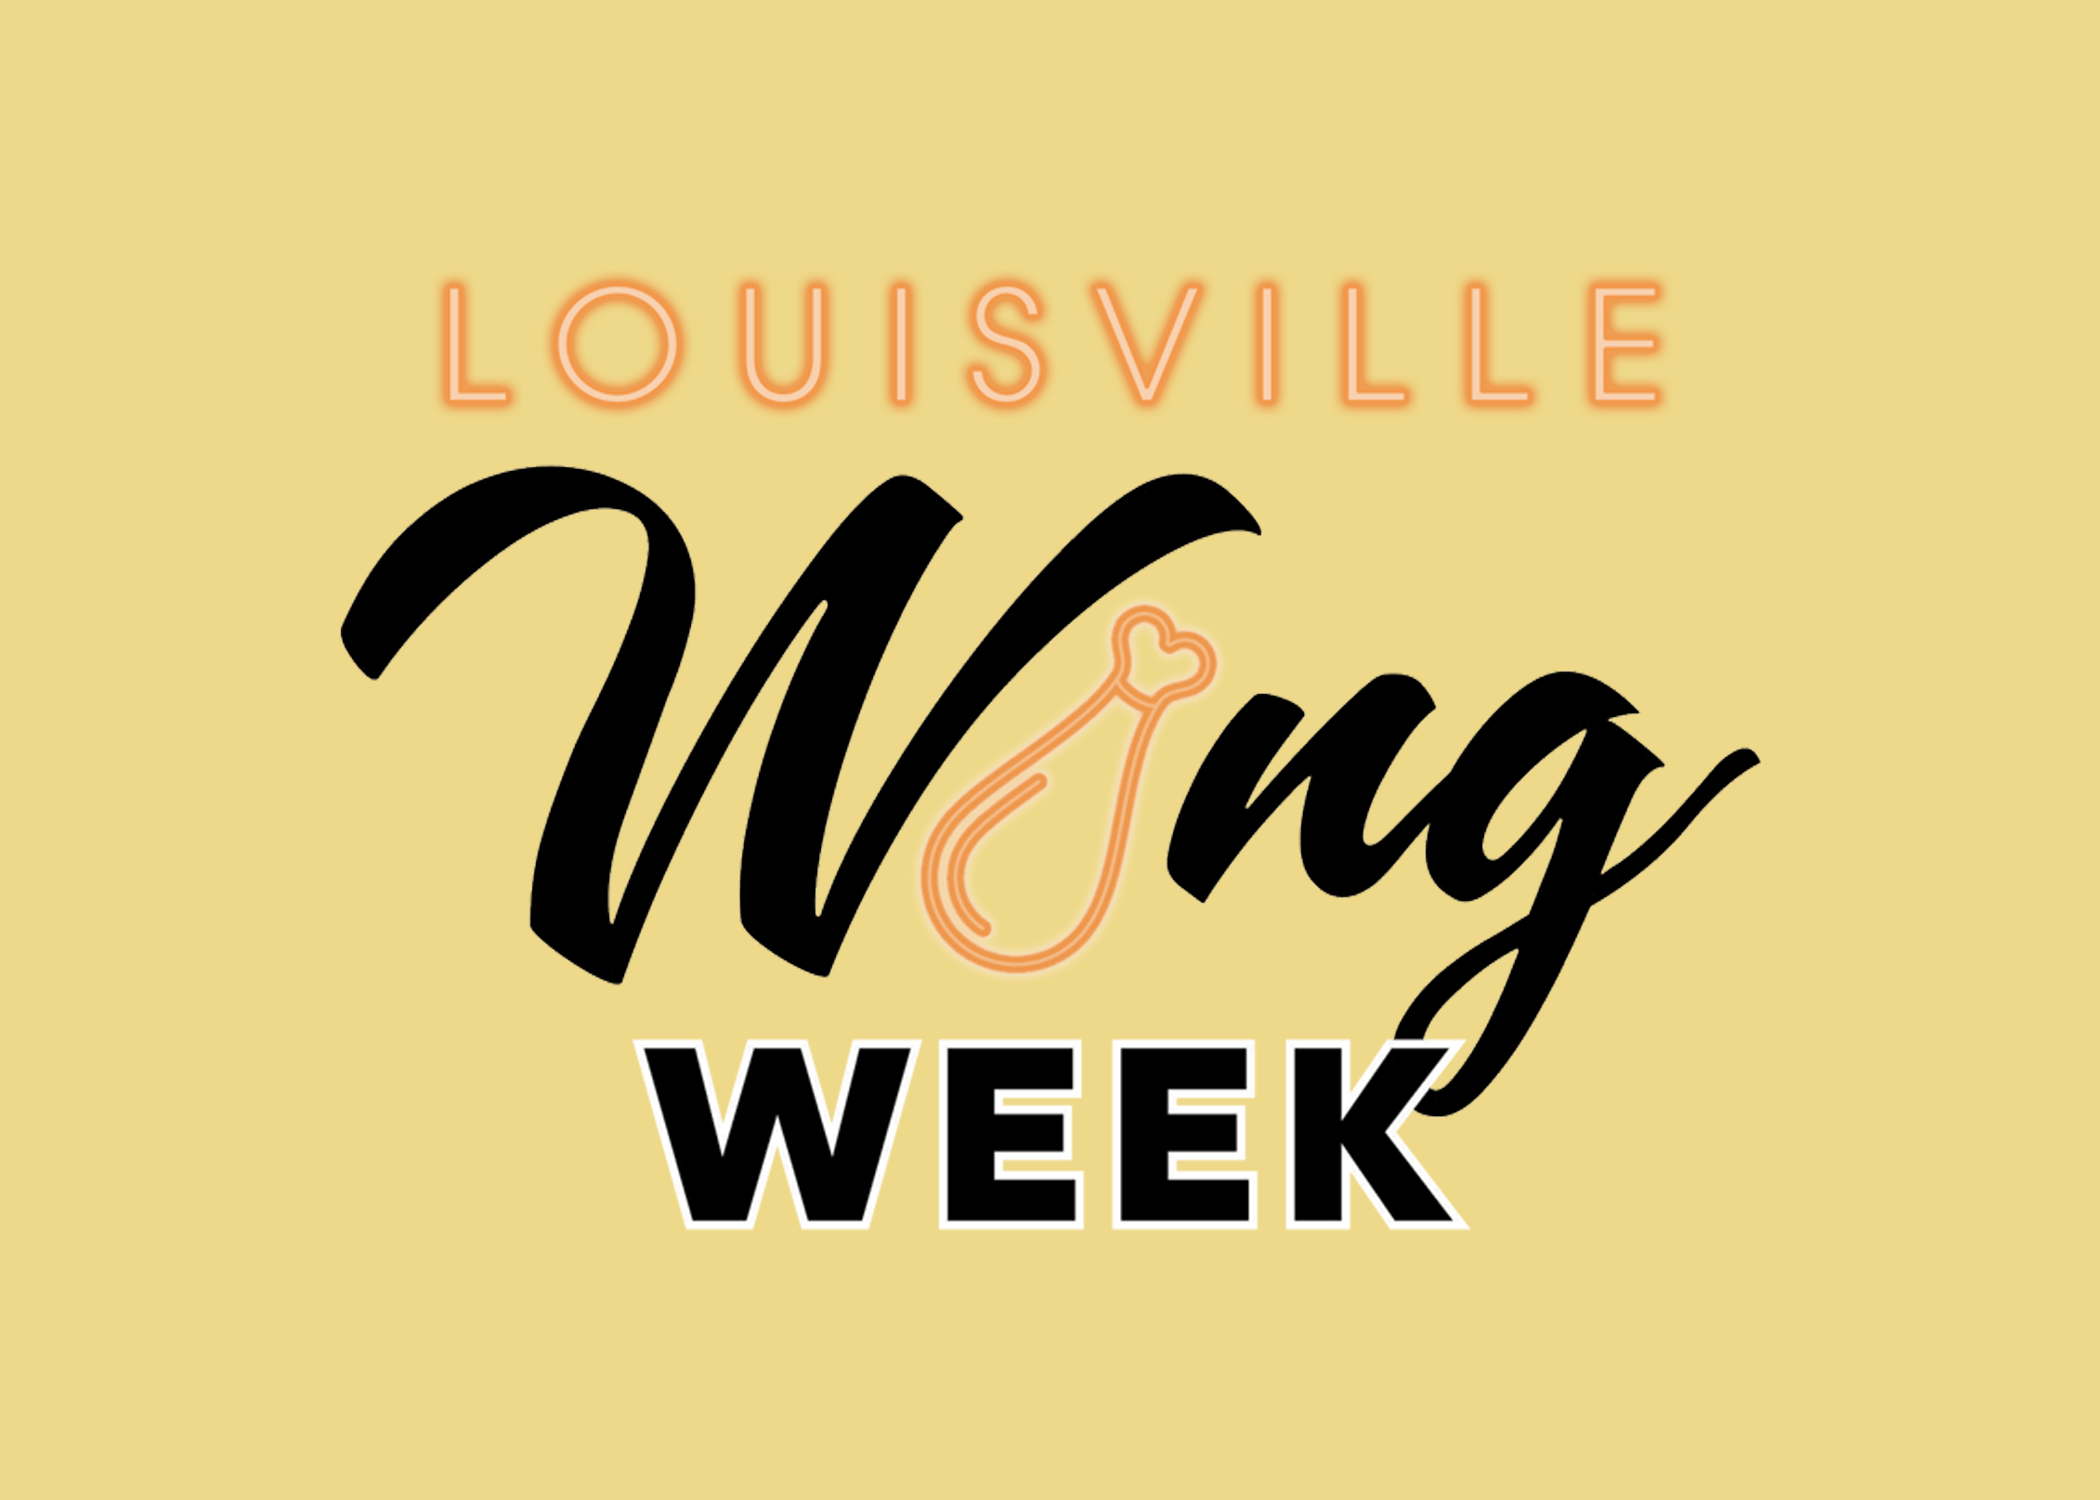 Louisville Wing Week kicks off with 7 wings at dozens of restaurants